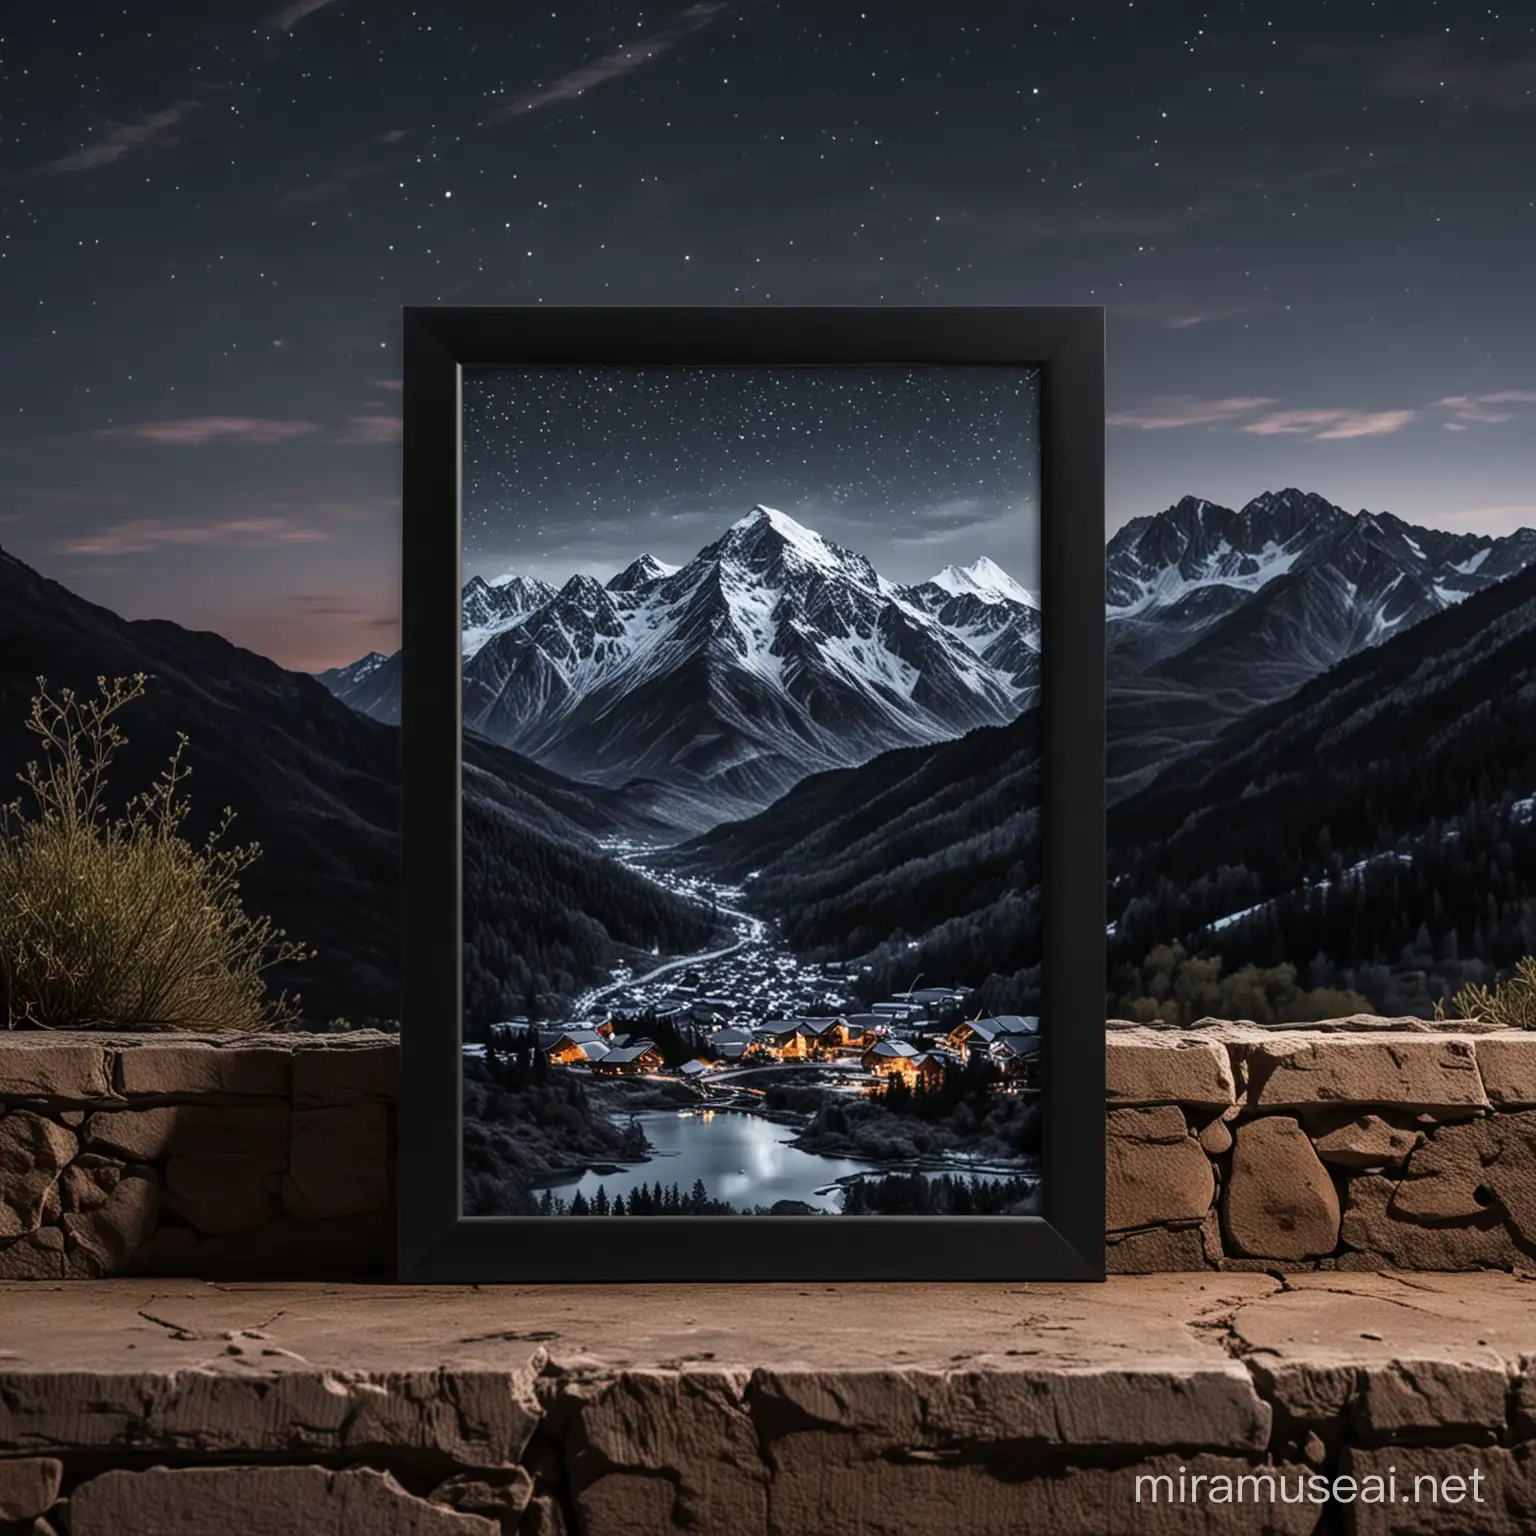 Nighttime Mountain Landscape in Small Black Frame Mockup